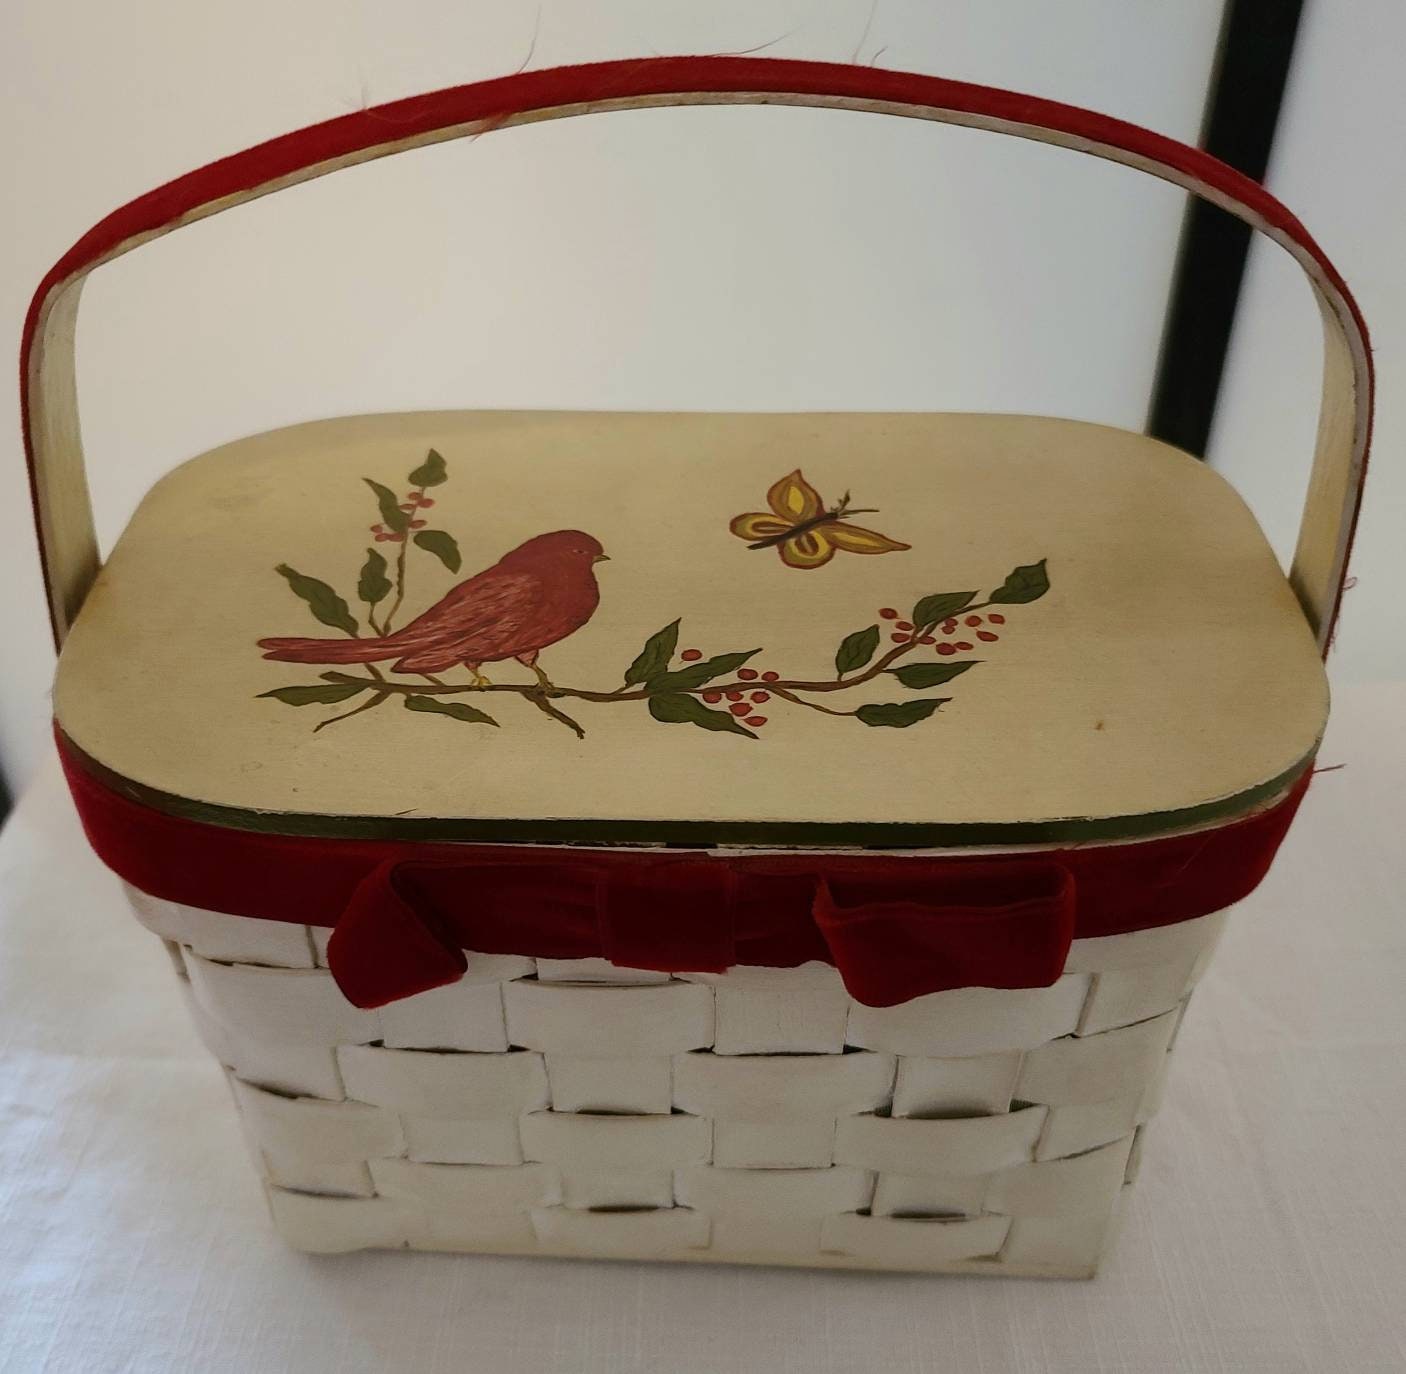 SALE Vintage Basket Purse 1970s White Wood Basket Purse Painted Red Bird Butterfly Flowers Red Velvet Trim Boho